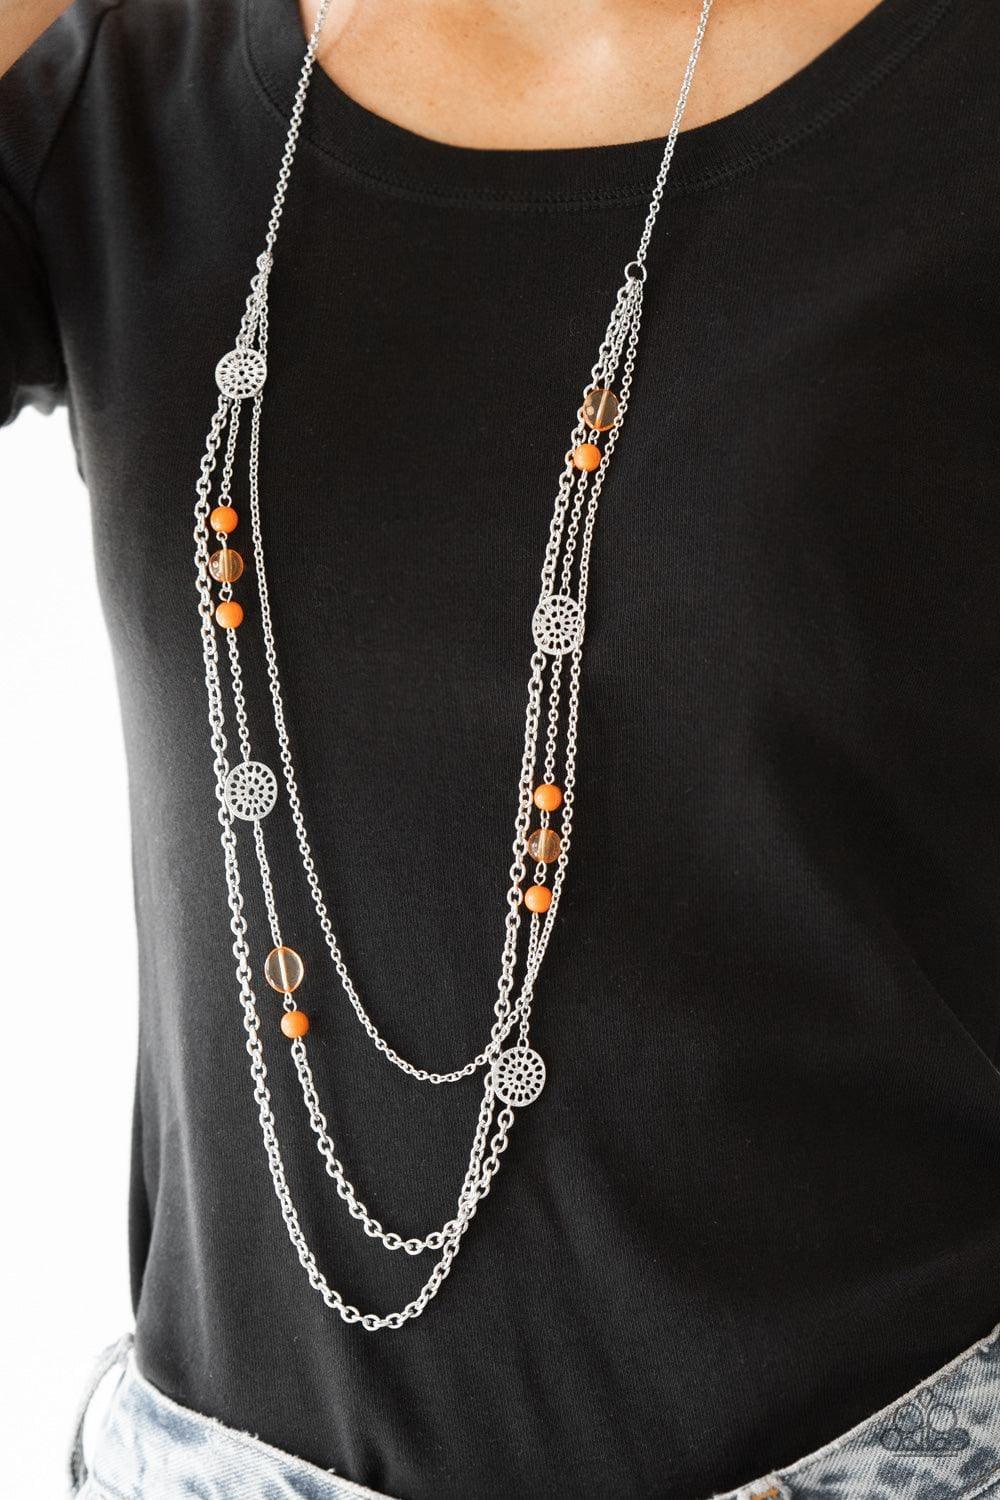 Paparazzi Accessories - Pretty Pop-tastic! - Orange Necklace - Bling by JessieK